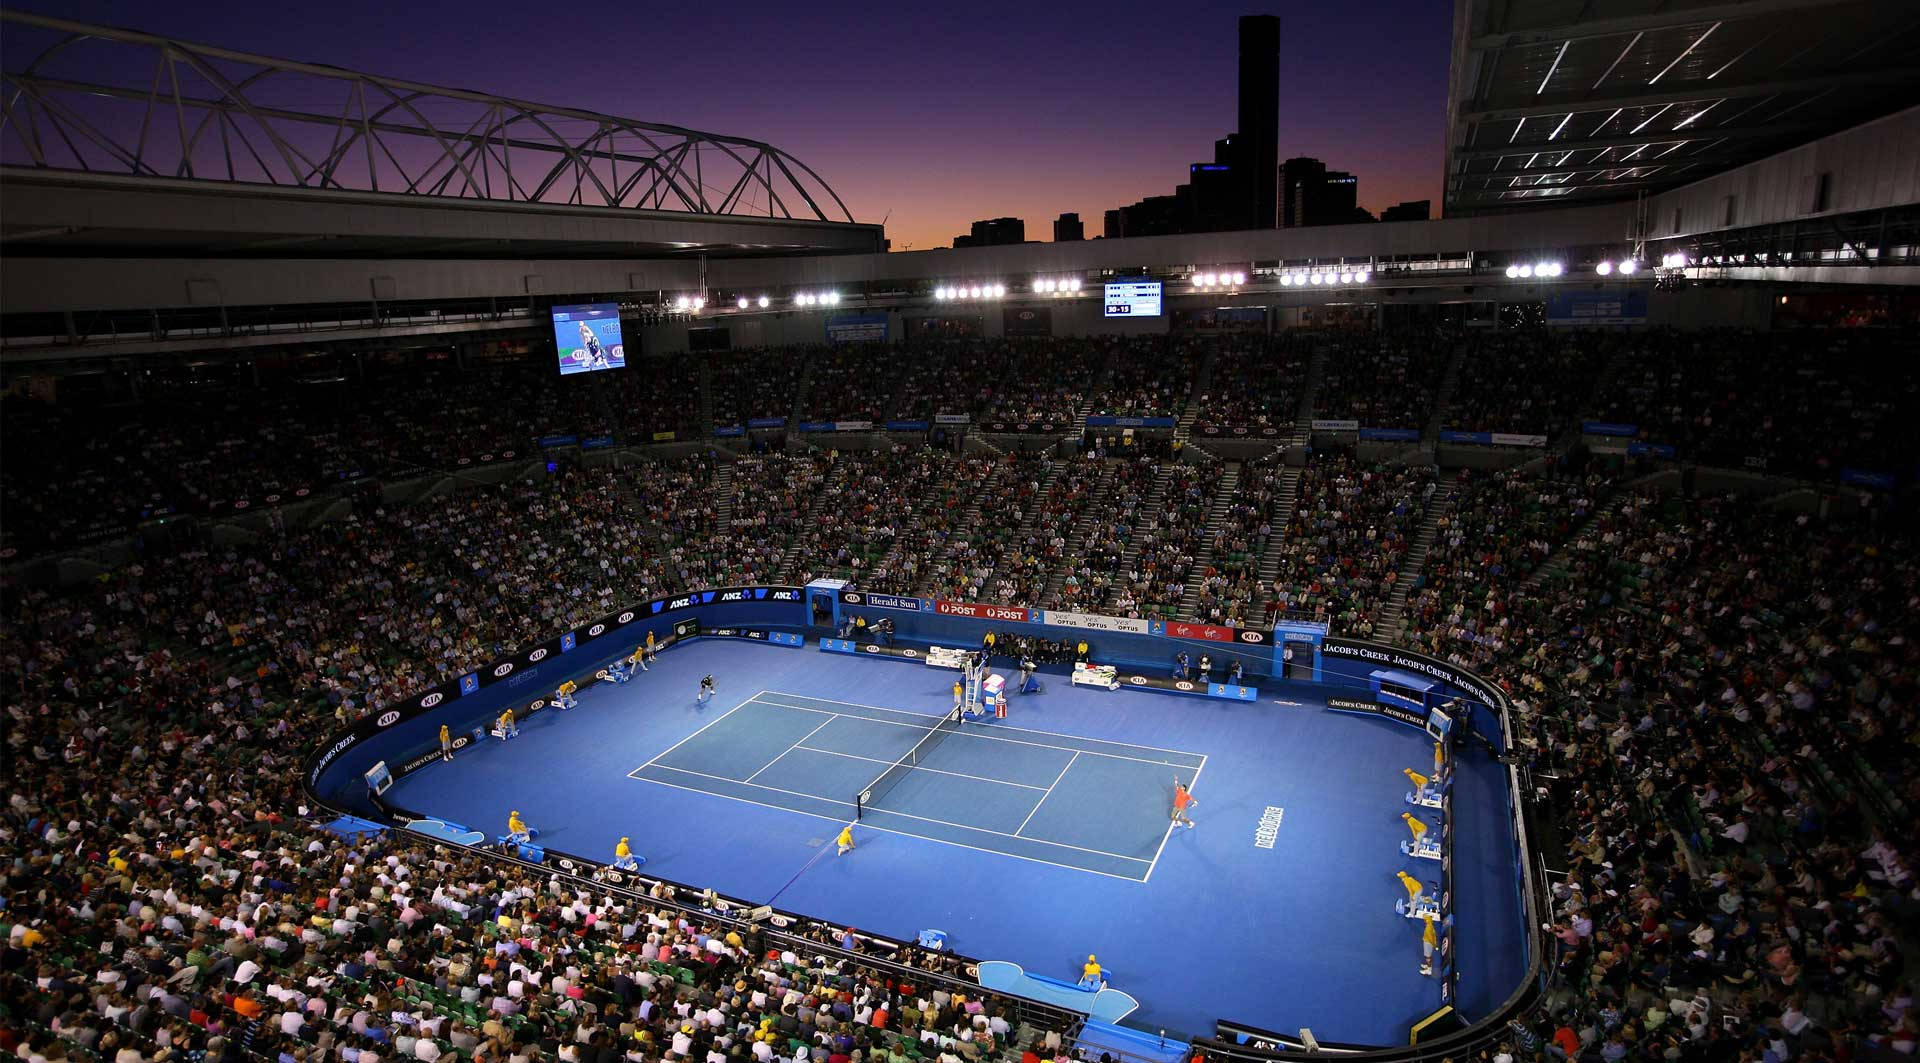 Australian Open Arena Aerial Photograph Picture